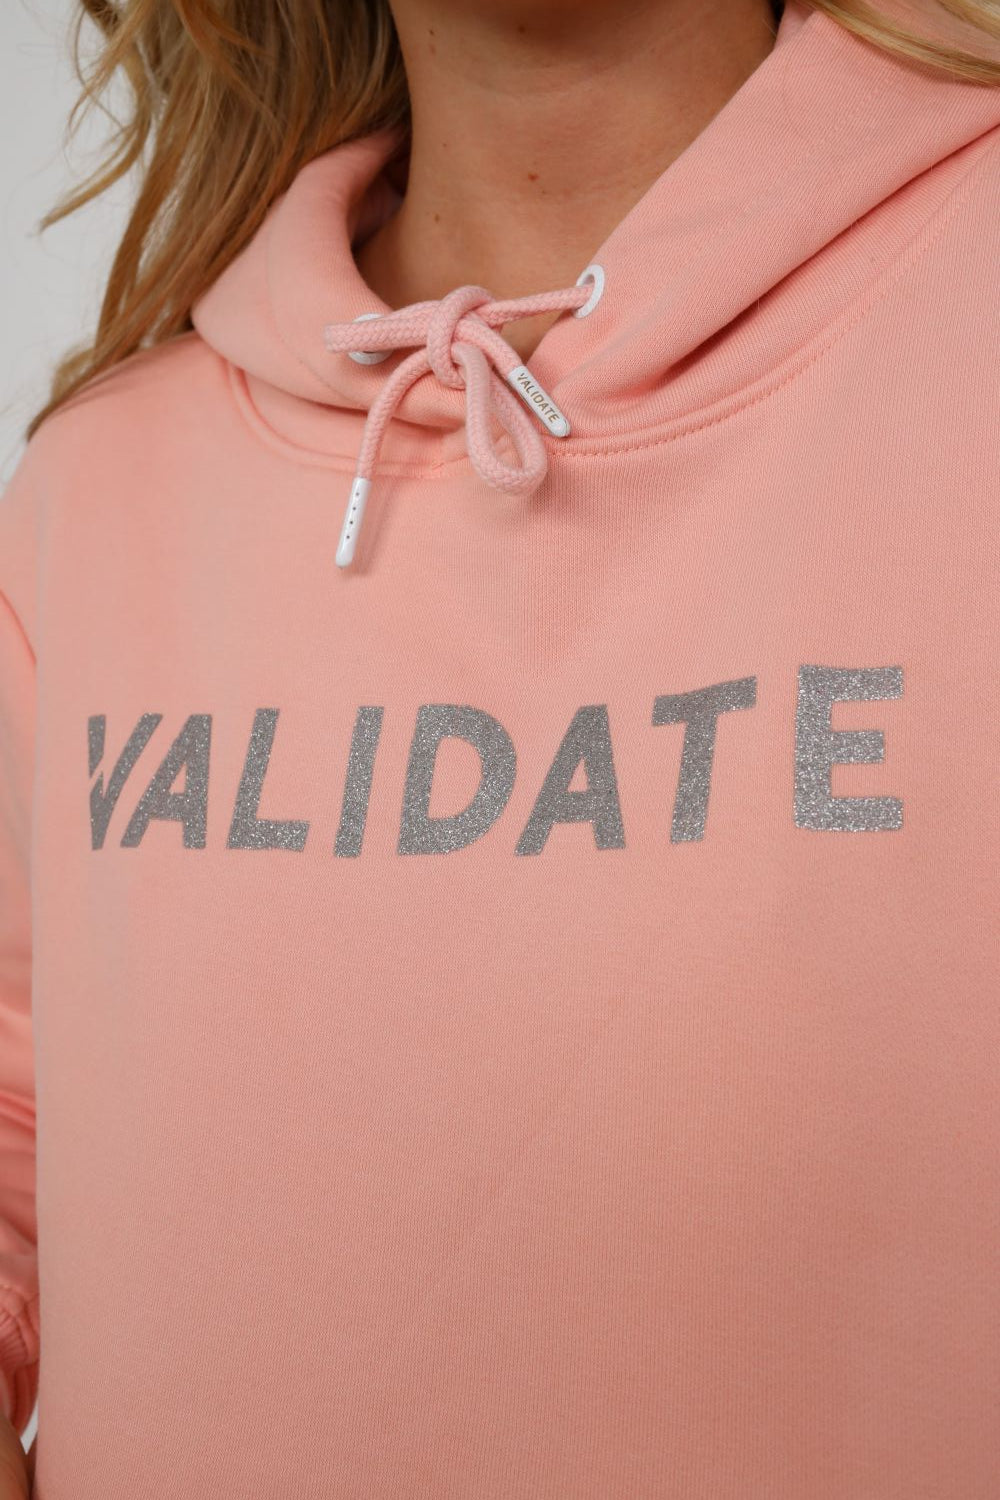 Validate Pink Brushed Arden Hoodie | Validate Fashion Hoodies & Sweatshirts | Hertfordshire